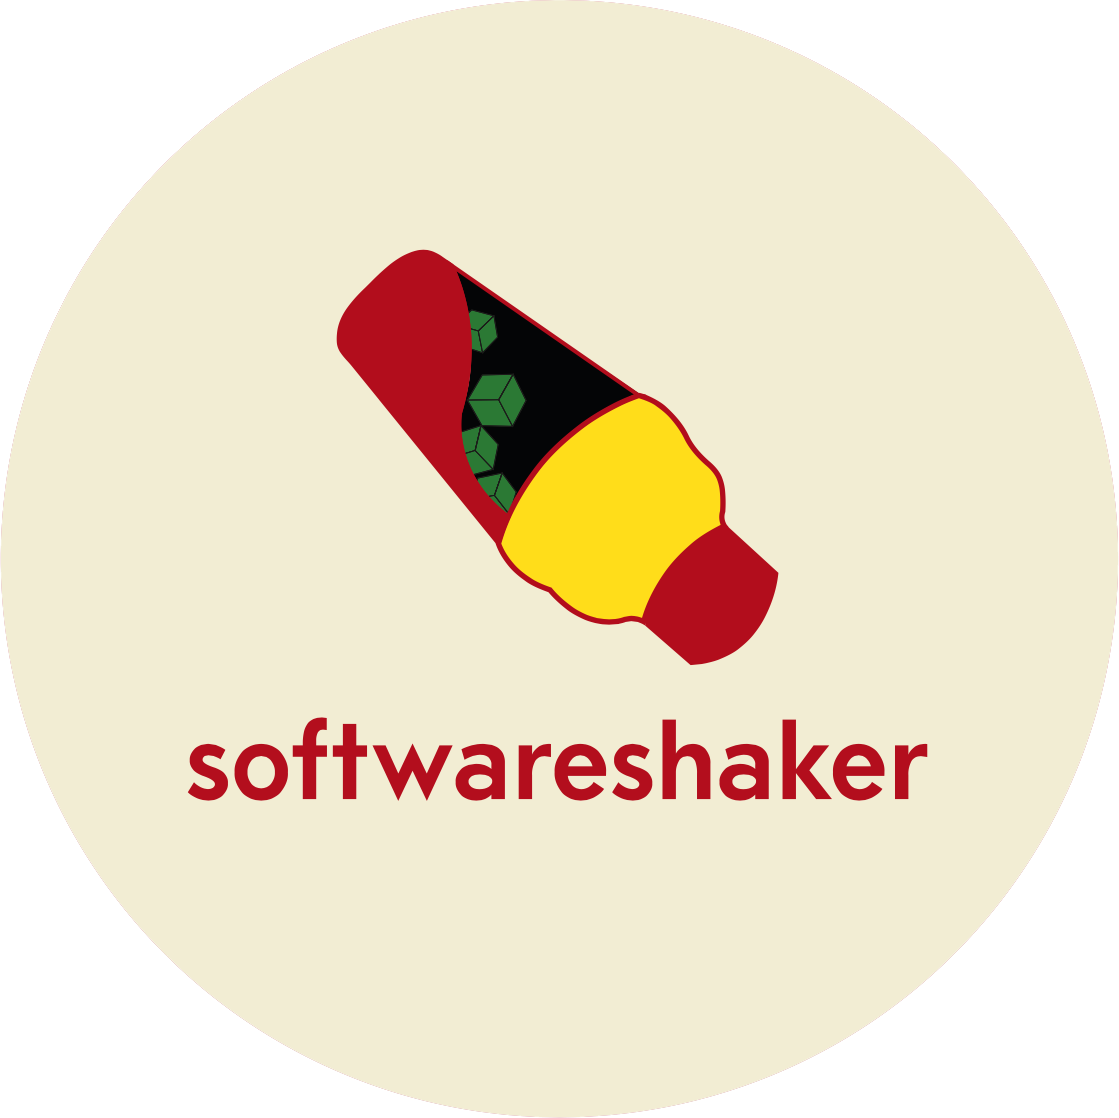 Softwareshaker